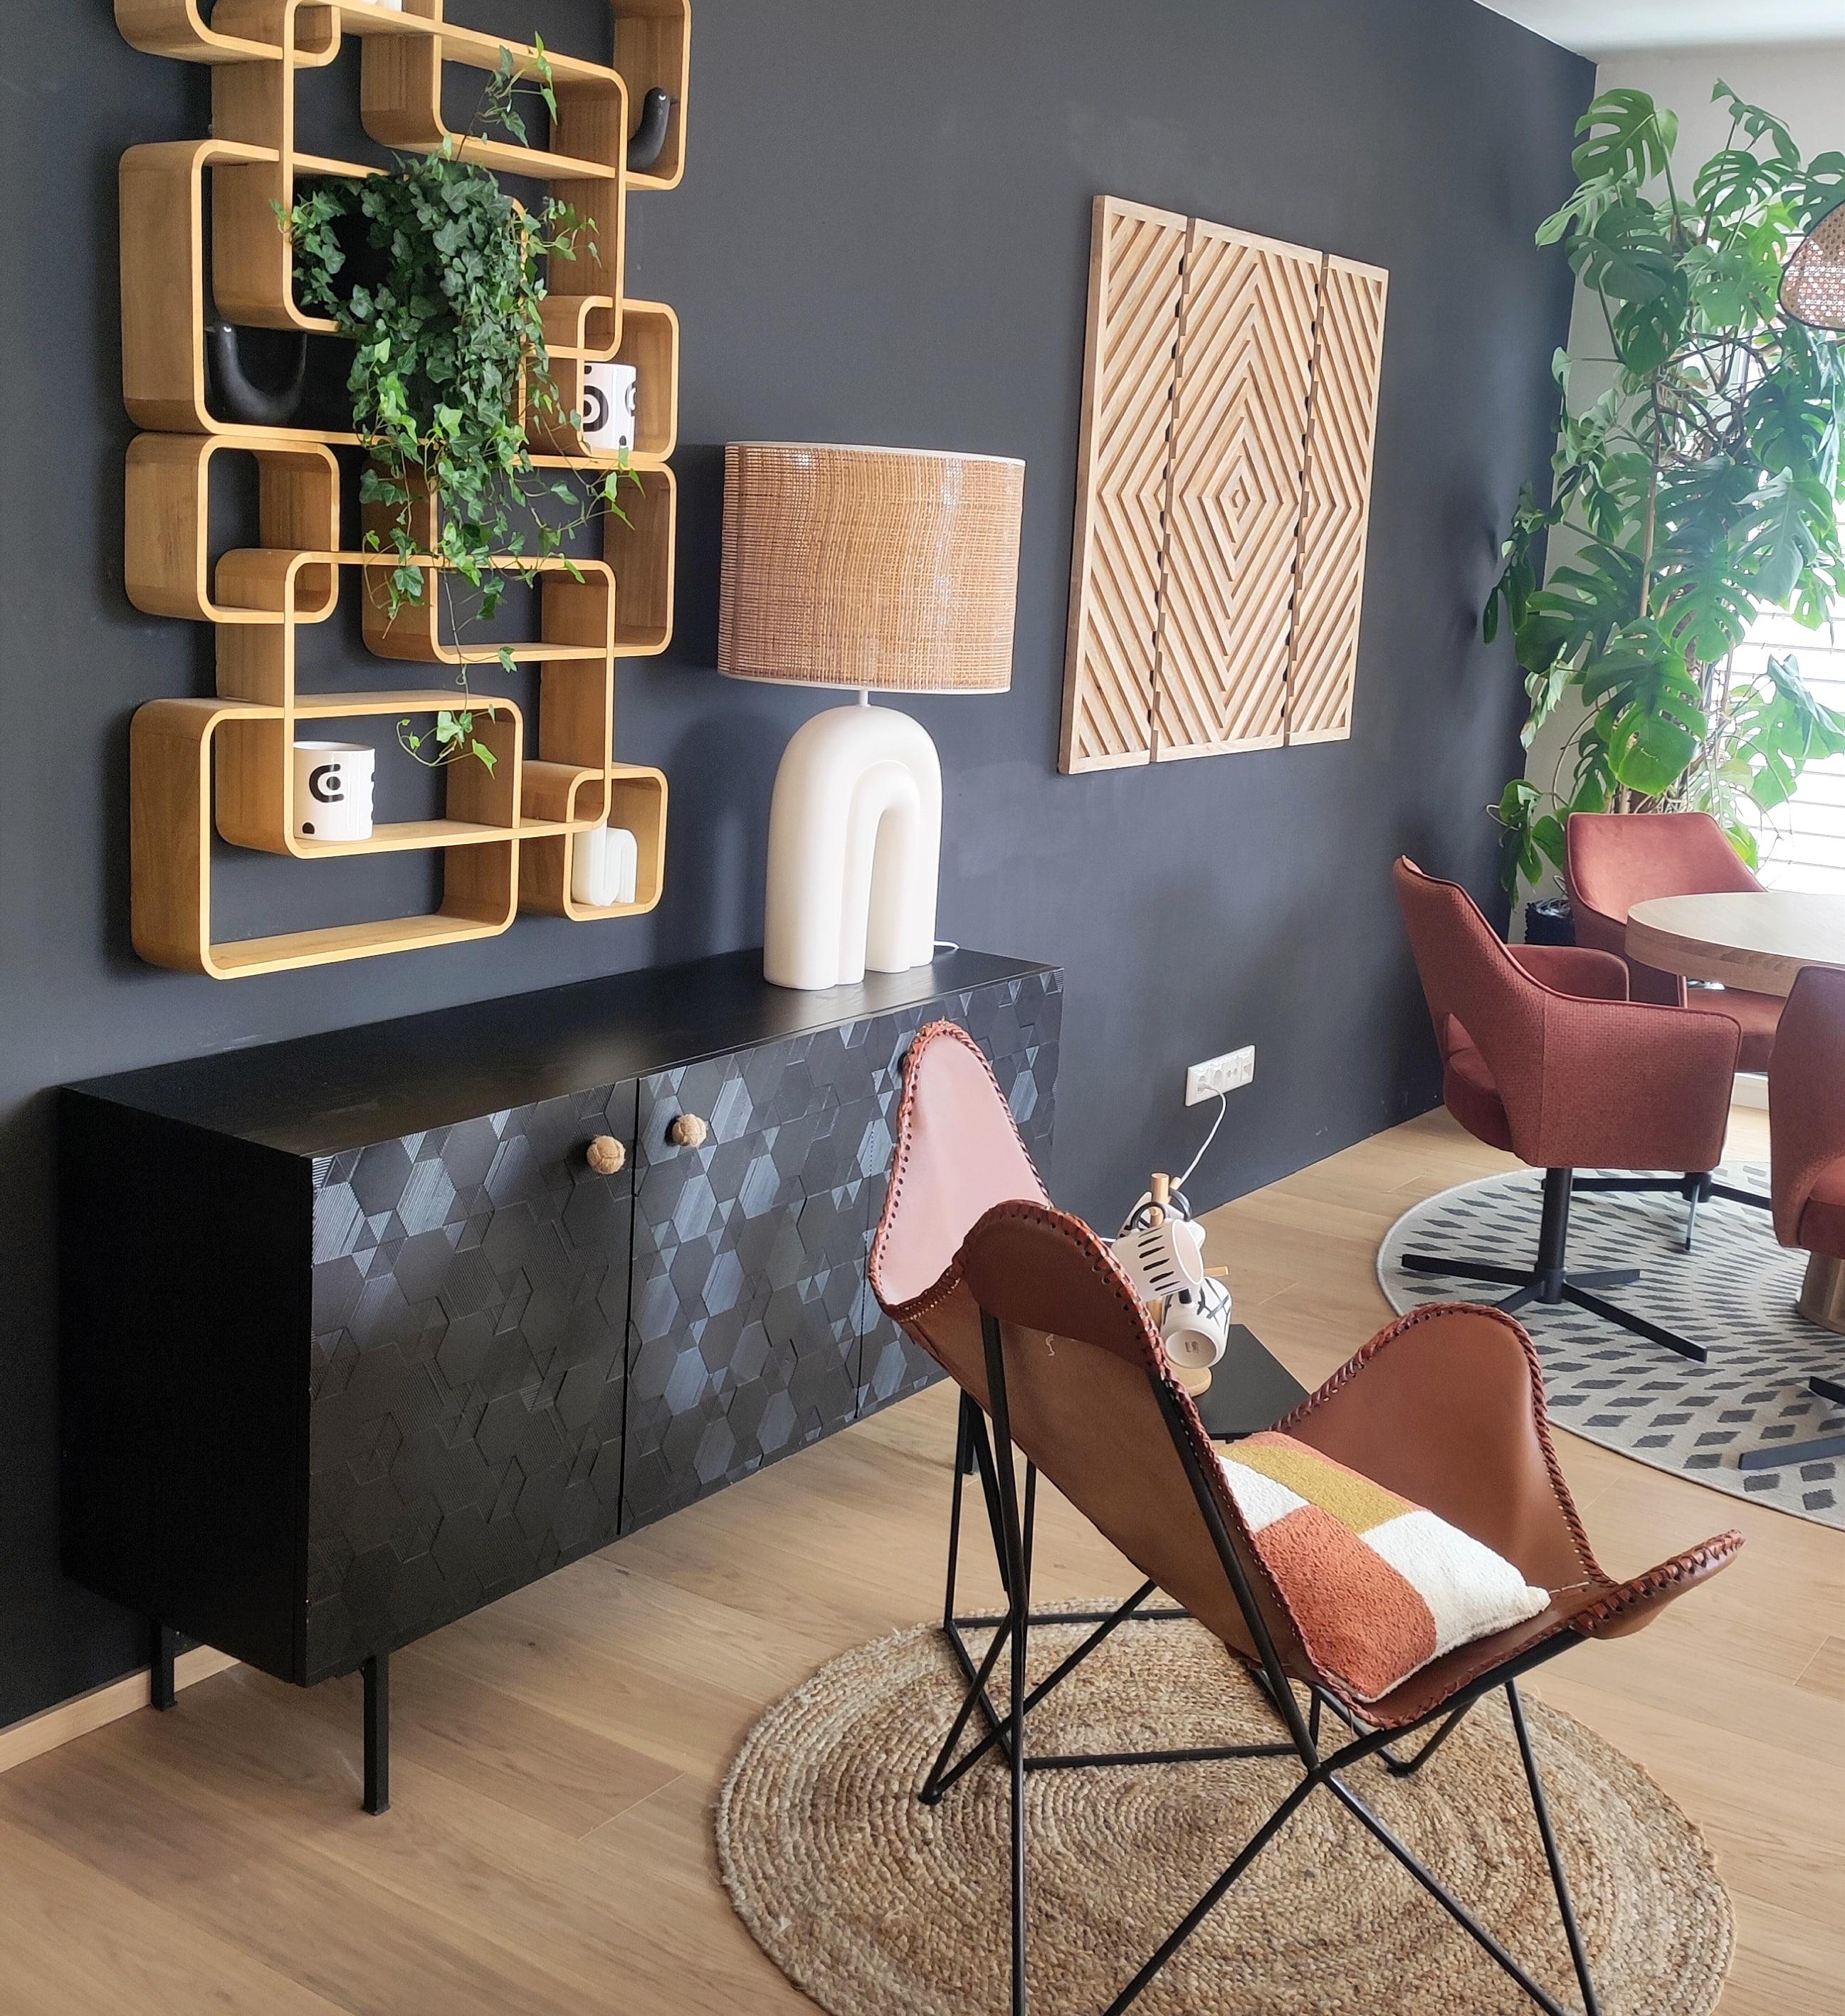 #furniture #living #interior #interiordesign #hygge #cozyhome #new #wood #wallart #blackwall #decor #decoration #new 